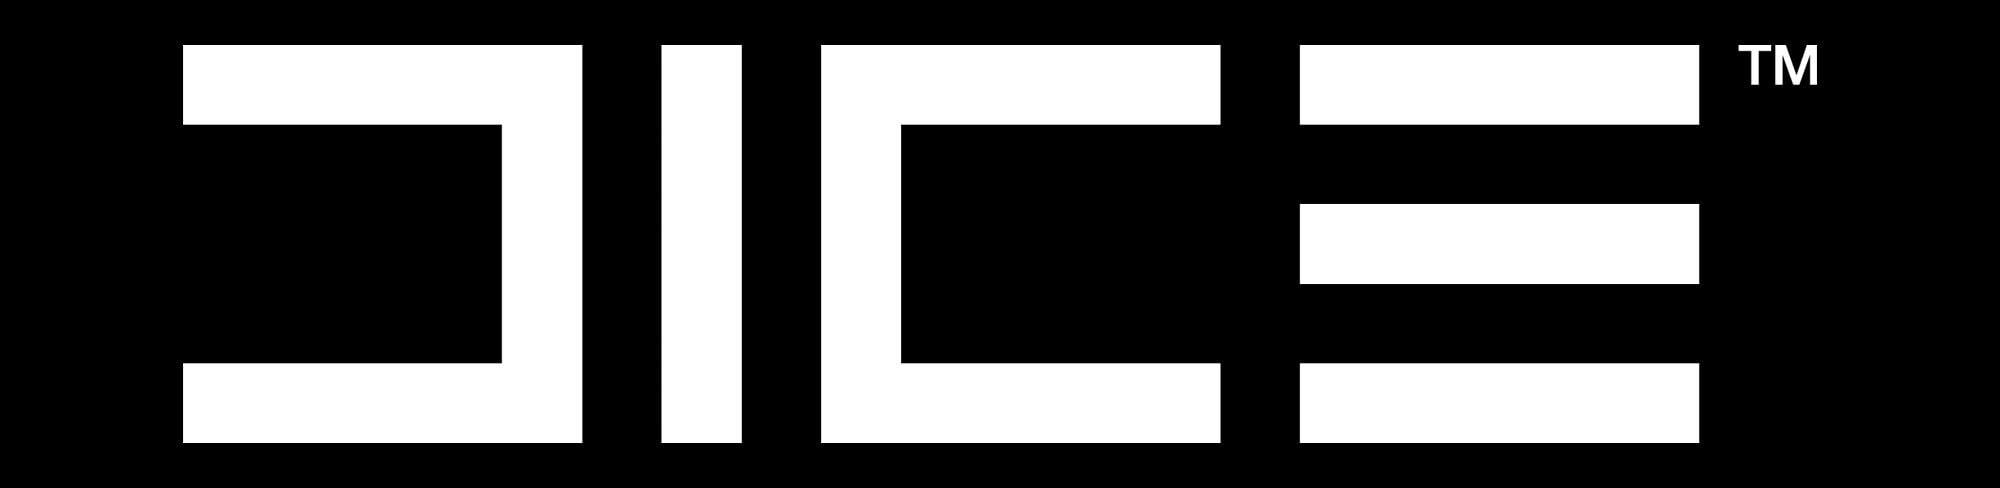 Dice Logo - DICE Media and Logotype downloads - DICE